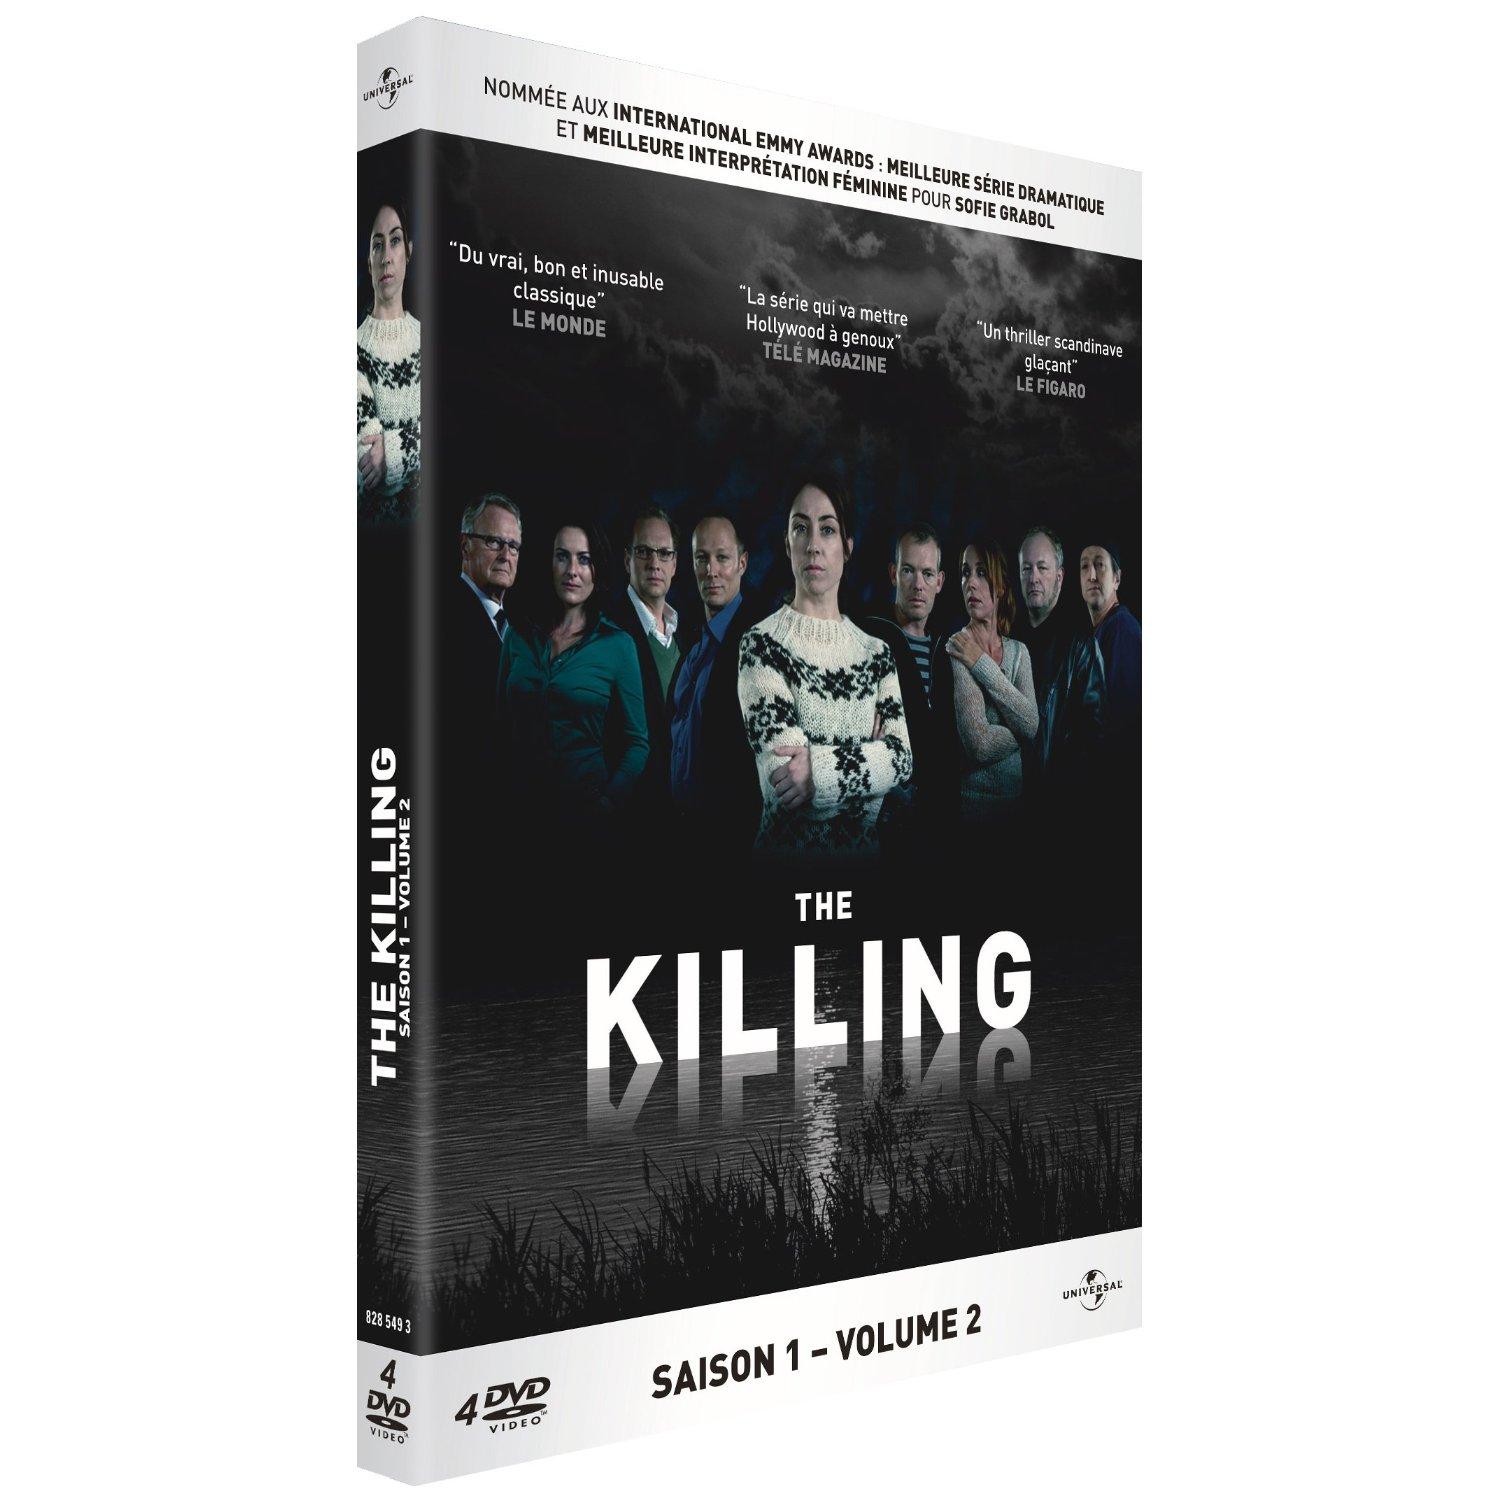 The Killing en coffret DVD disponible